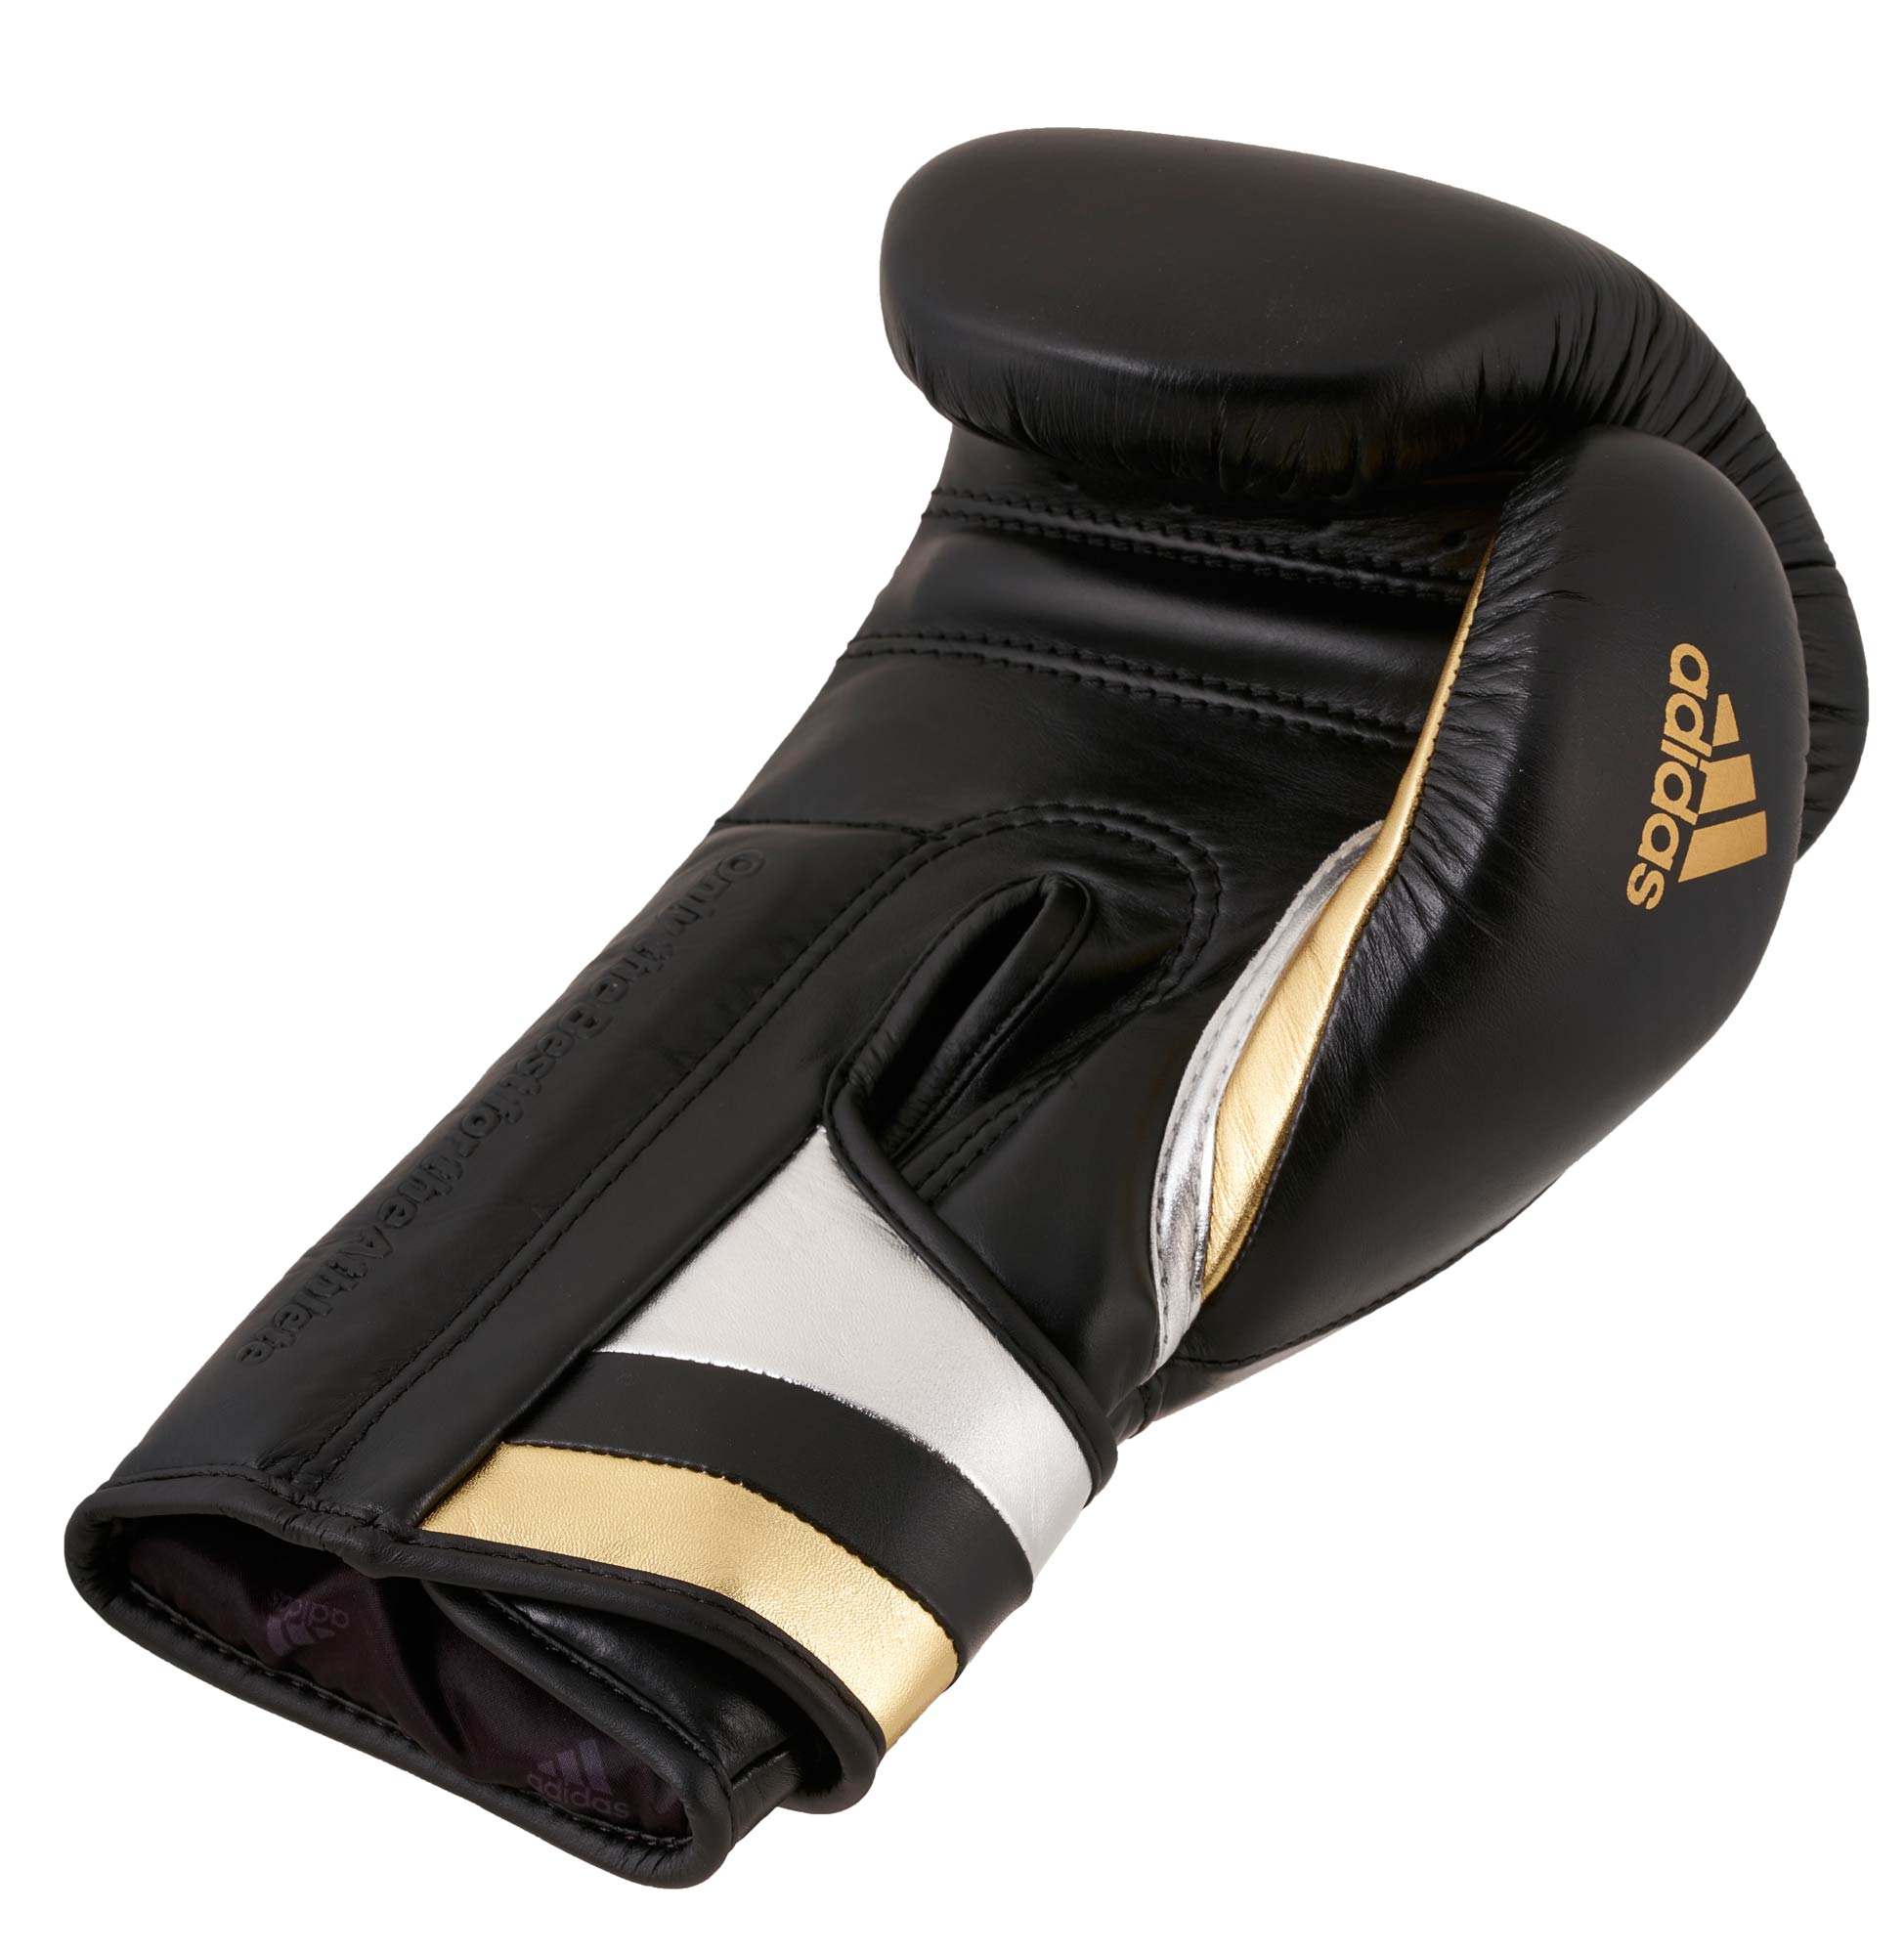 adidas adispeed strap up boxing gloves black/gold/silver, ADISBG501PRO